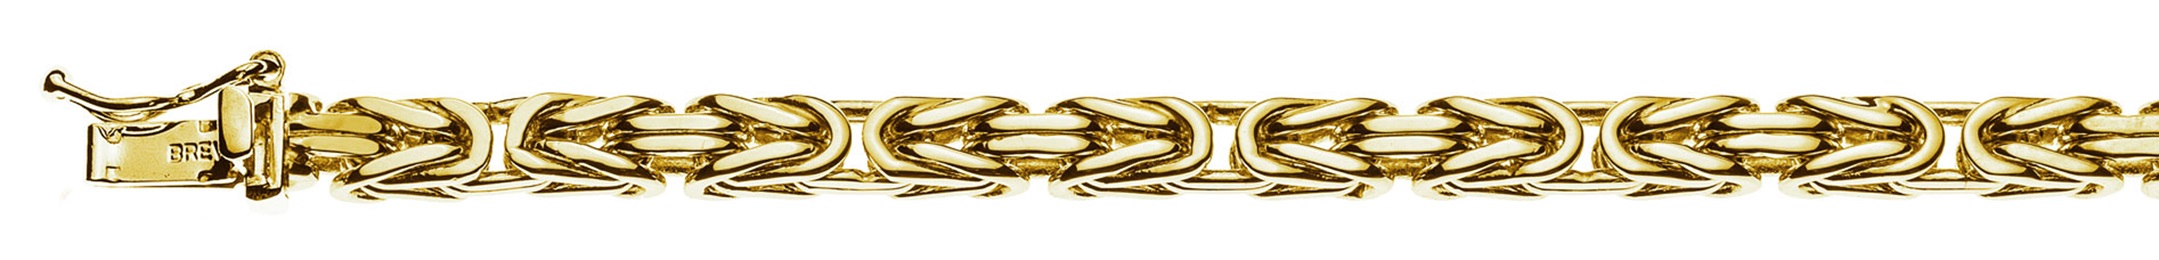 AURONOS Prestige Armband 18k Gelbgold Königskette 4mm 19cm 